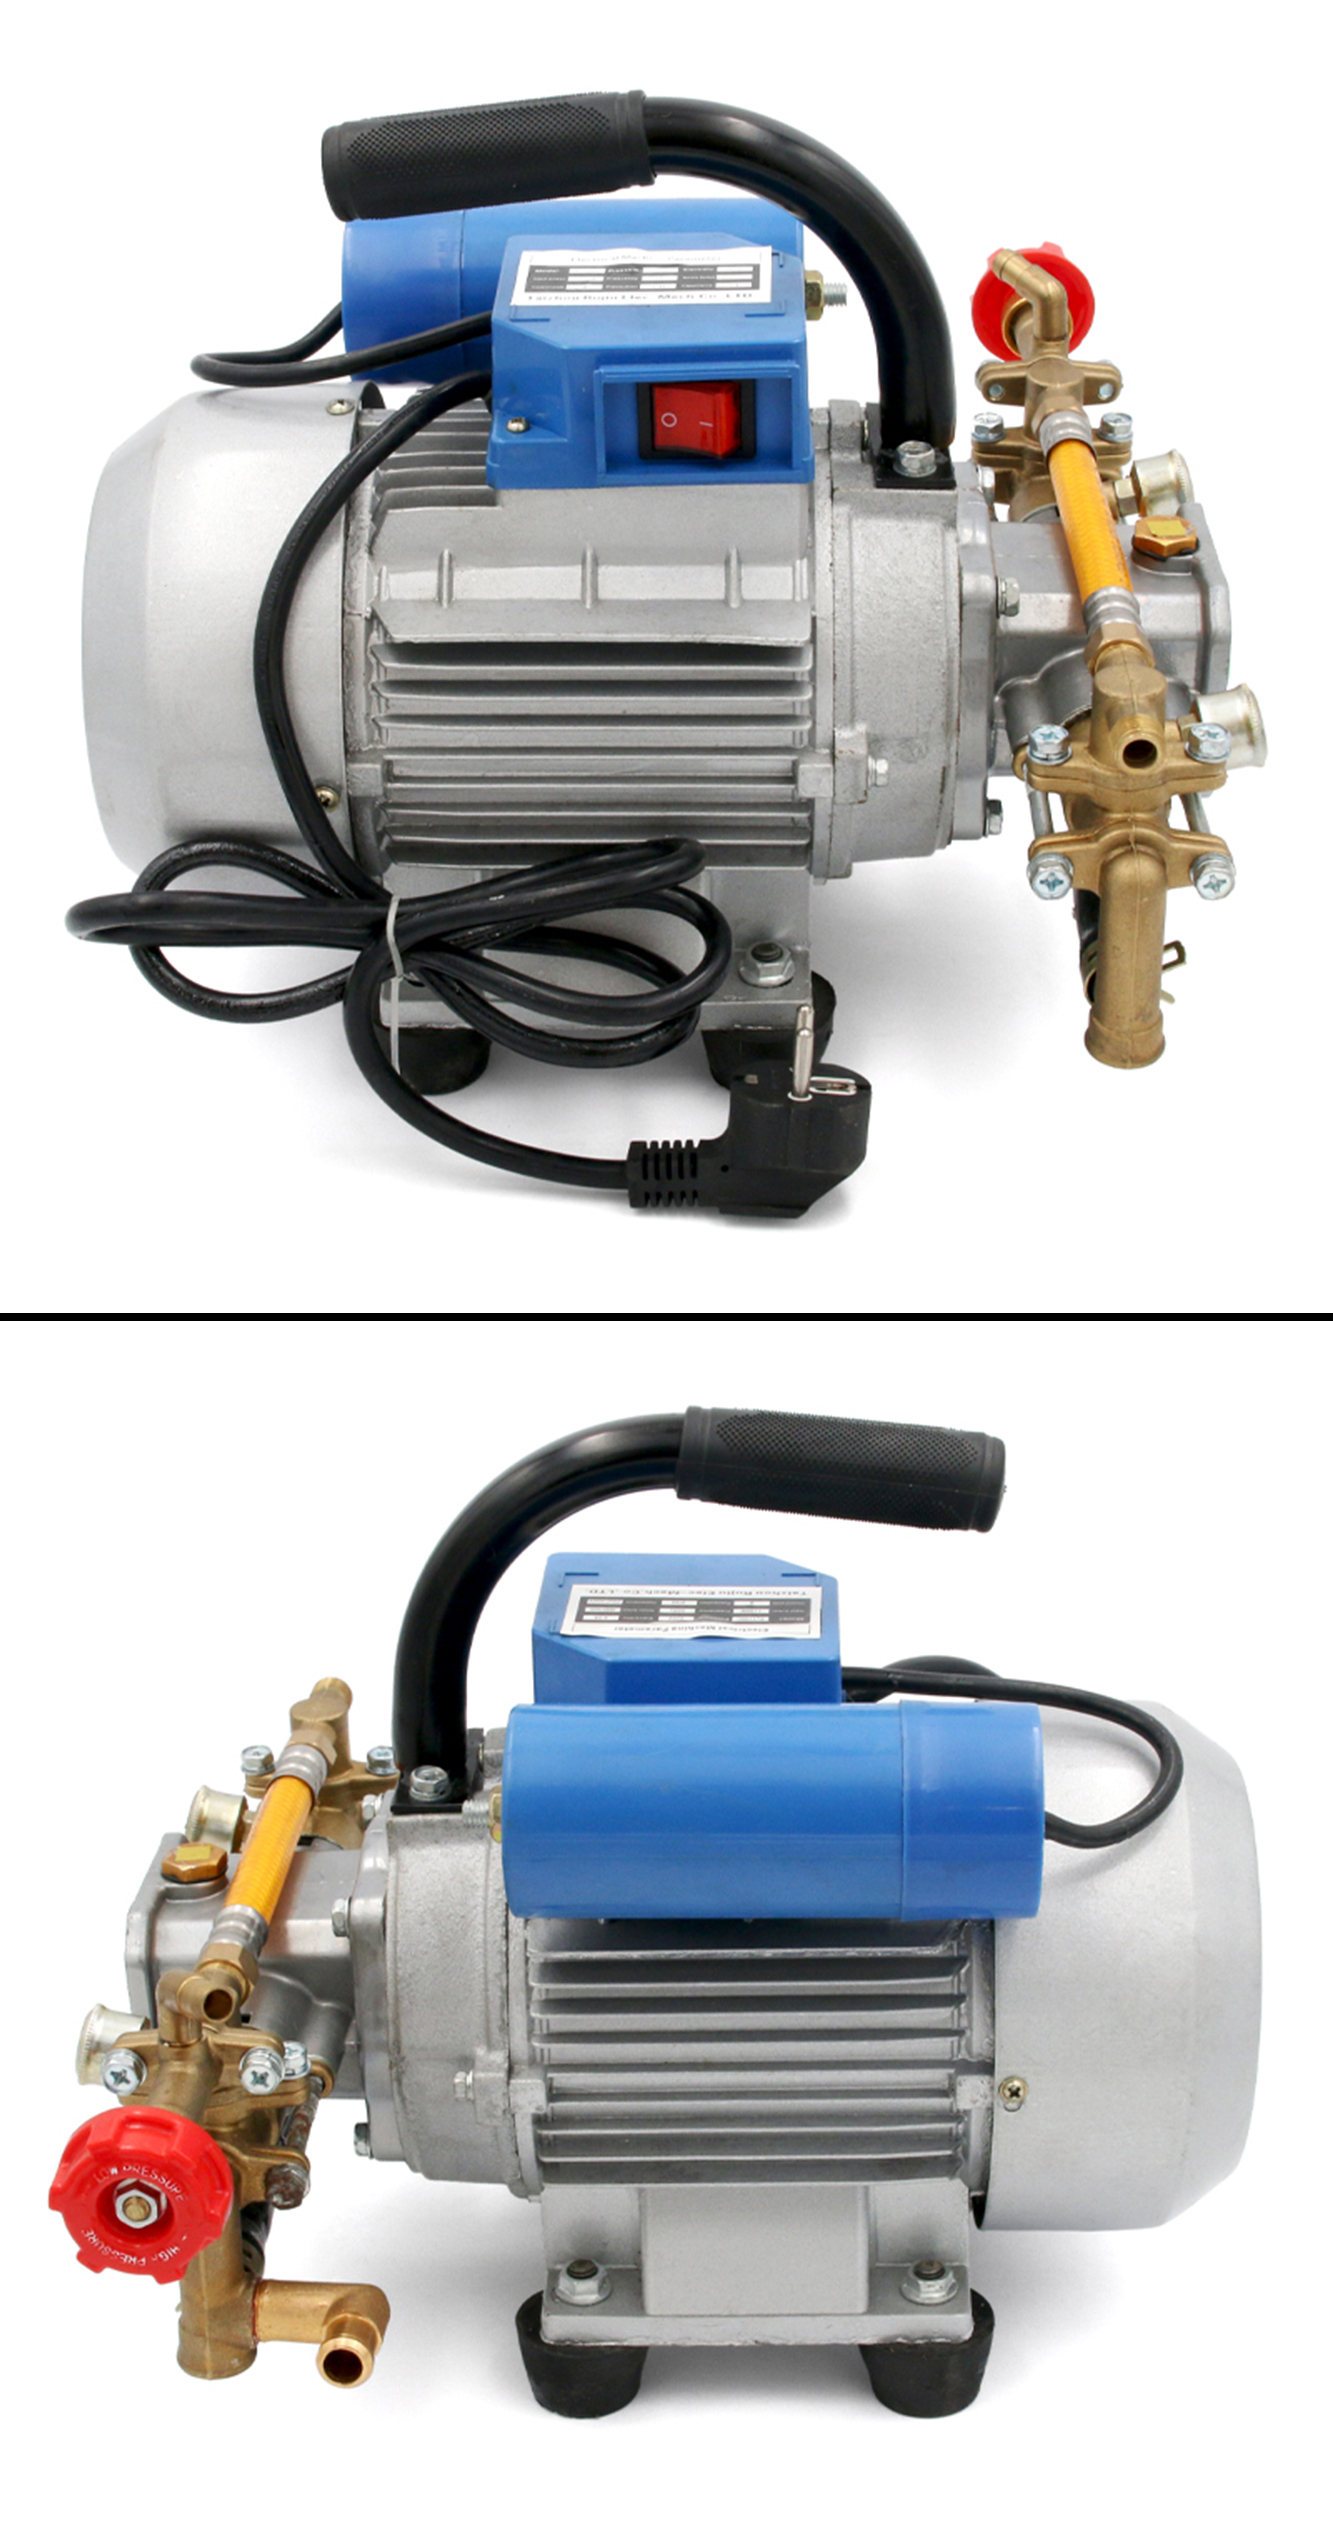 Neptun 1100W Electric Portable Power Pressure Sprayer Pump with